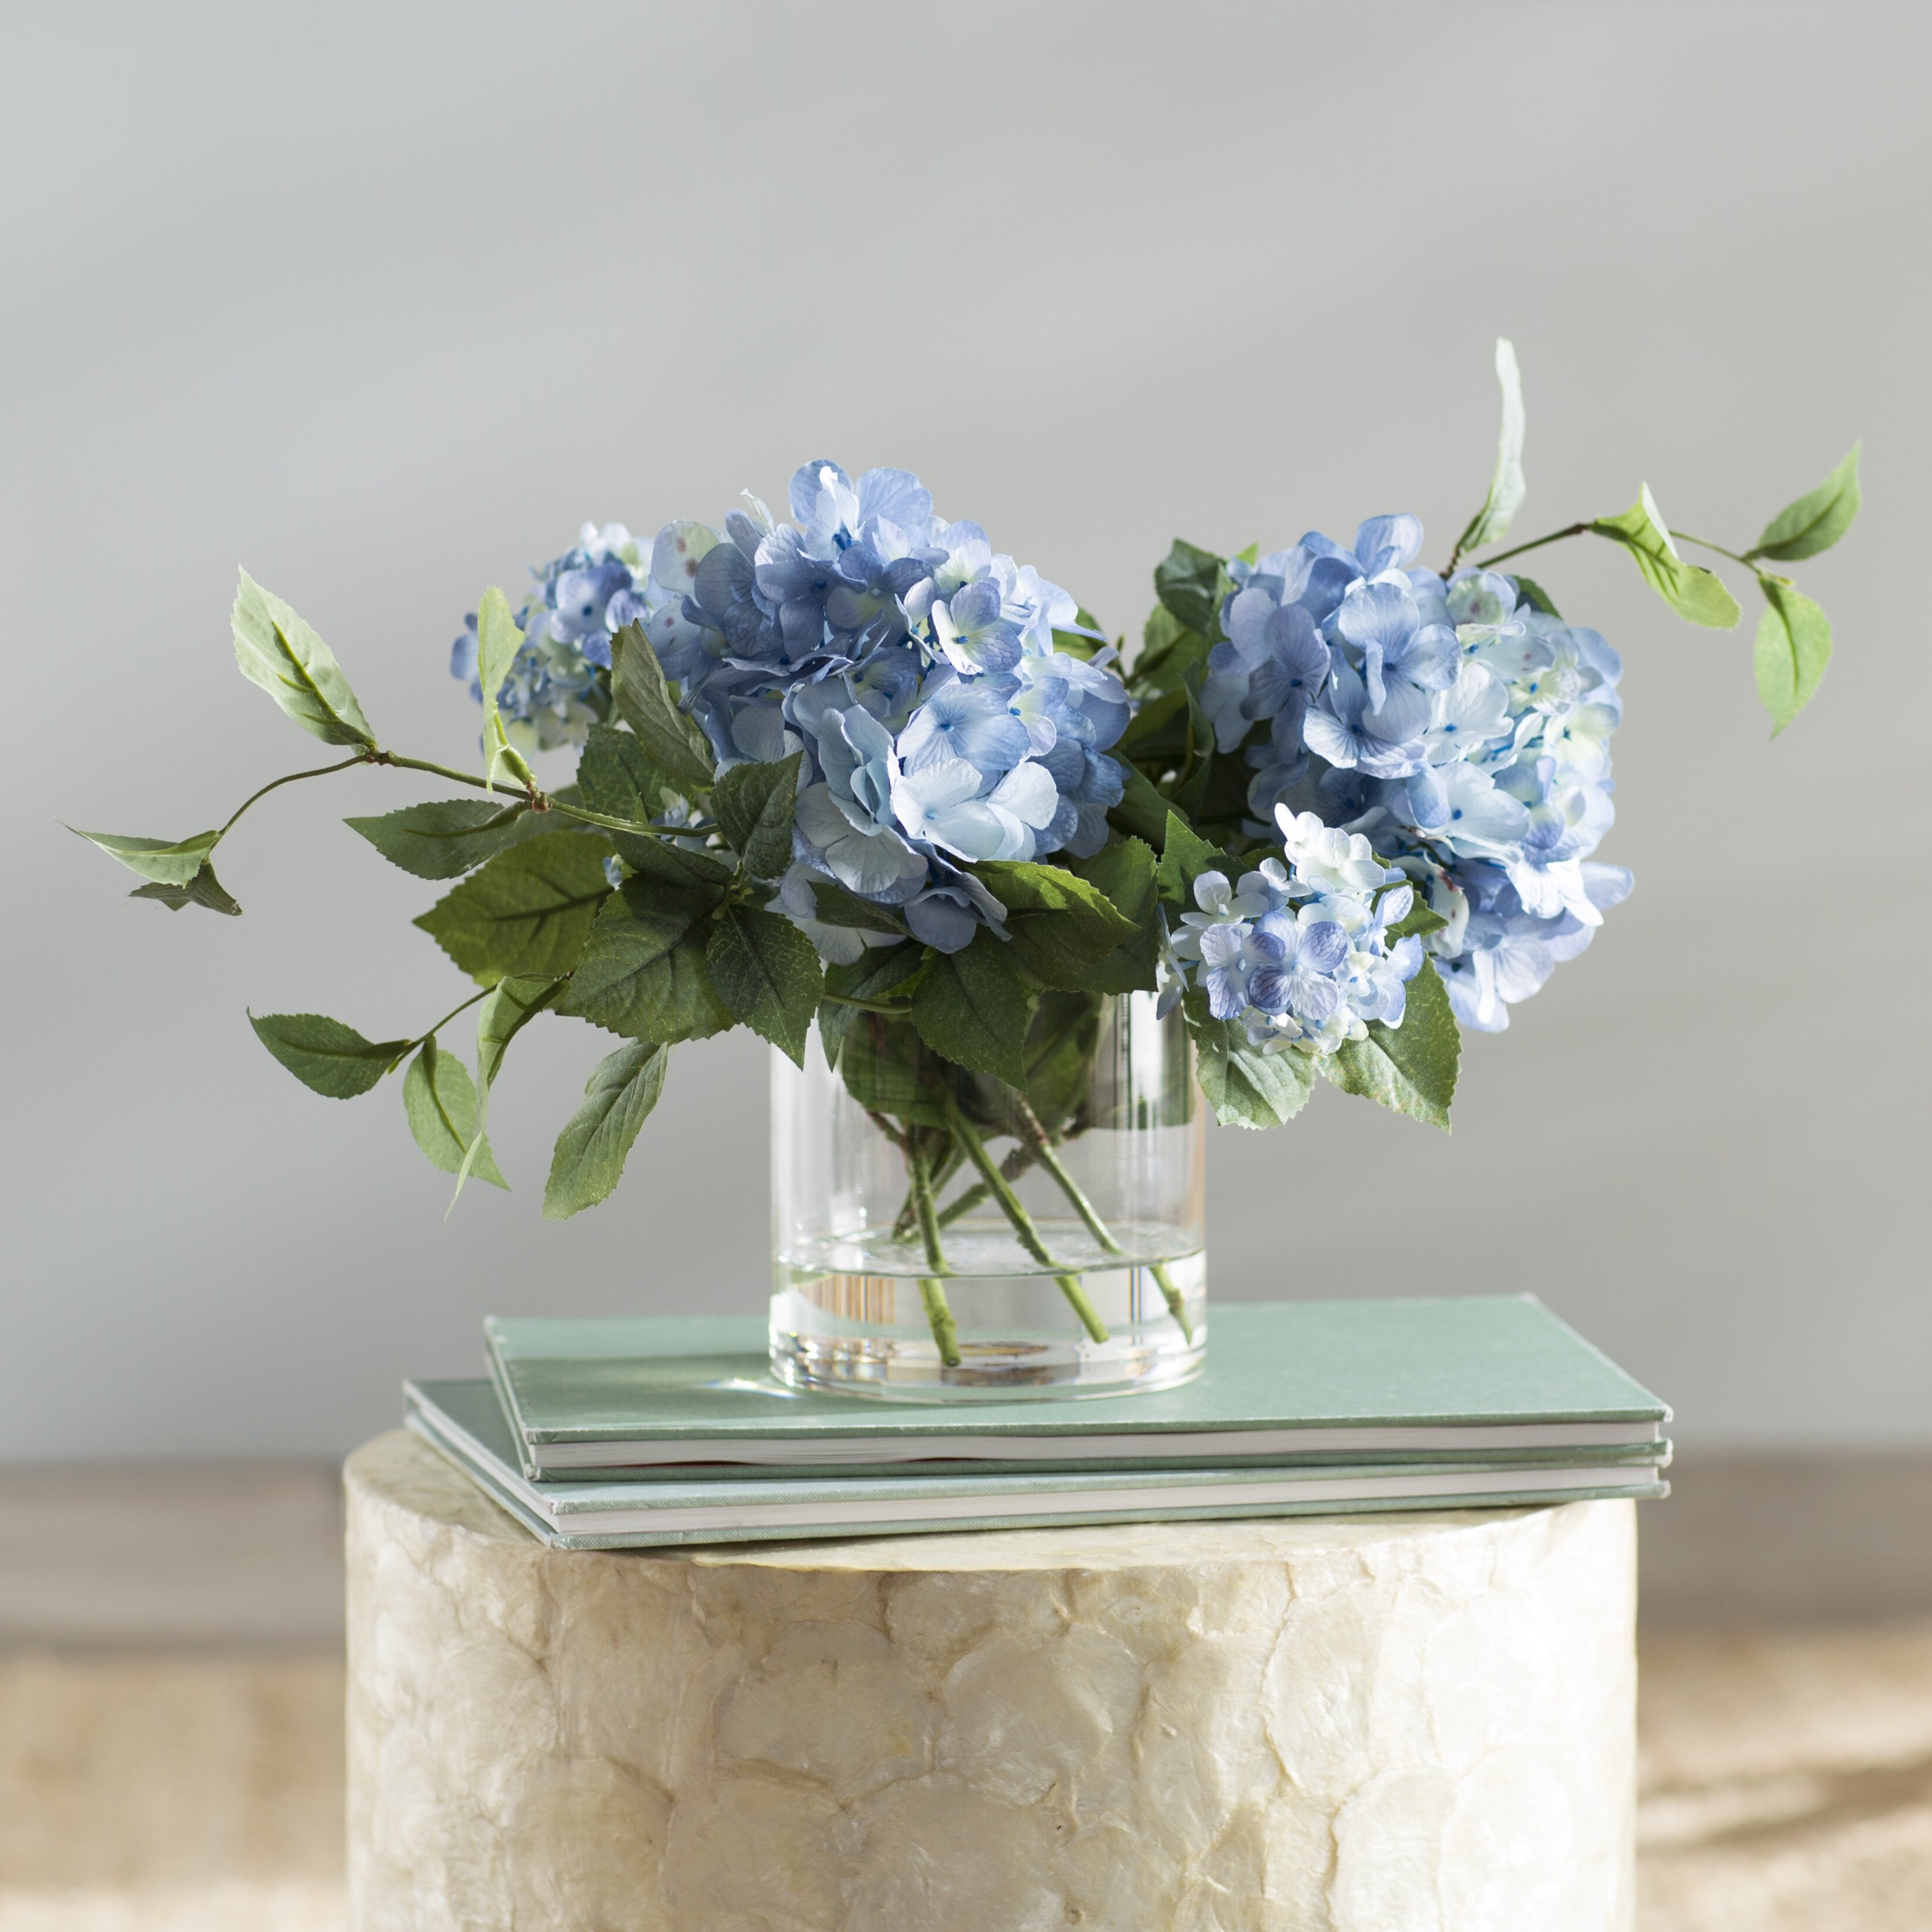 Hydrangea Floral Arrangement in Vase